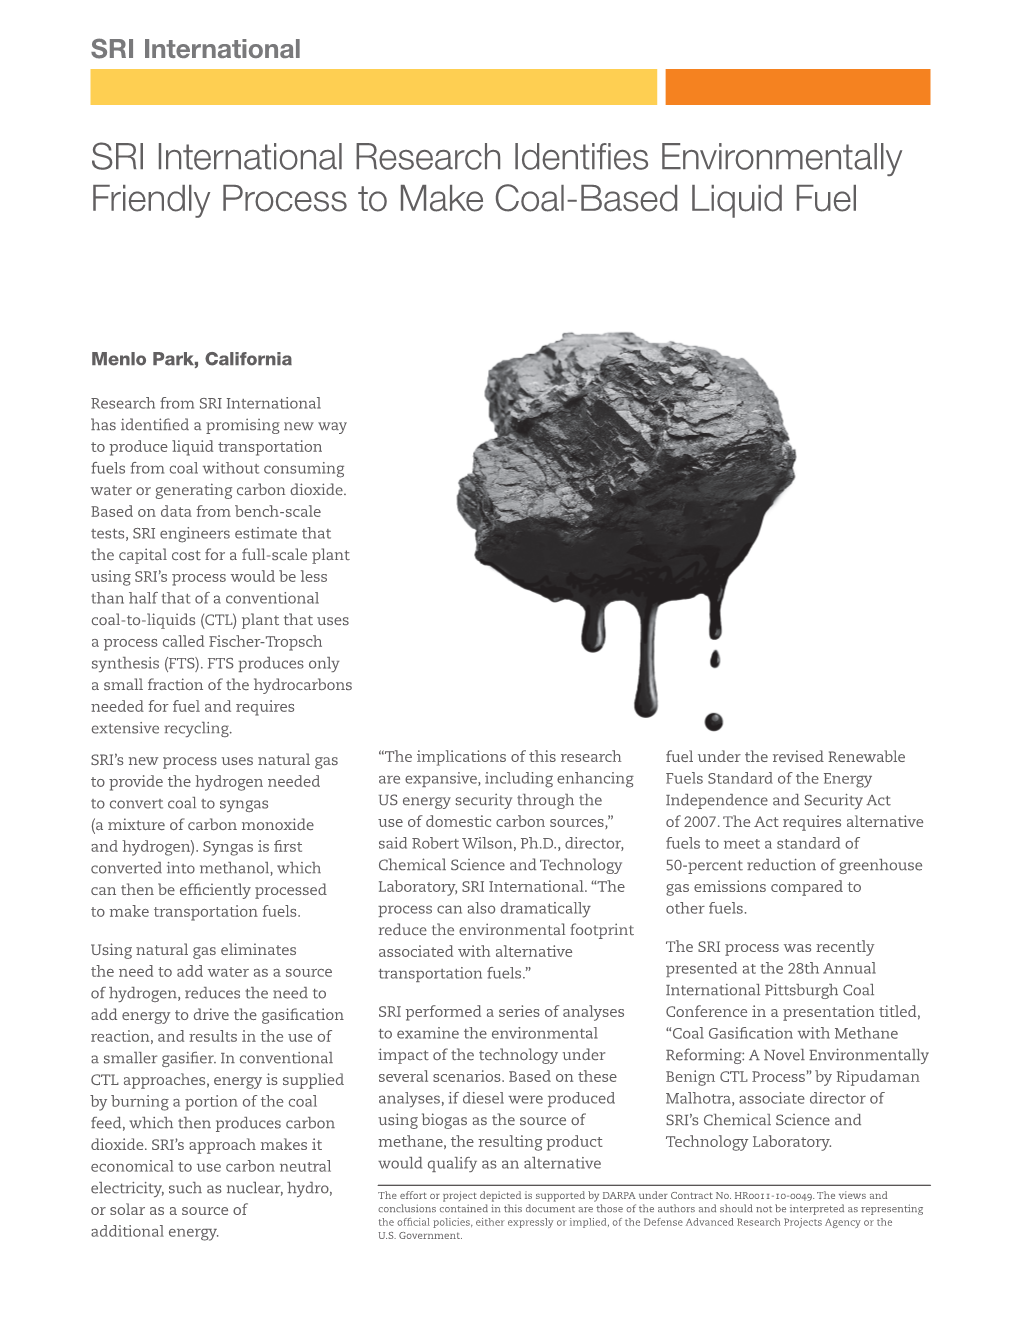 SRI International Research Identifies Environmentally Friendly Process to Make Coal-Based Liquid Fuel